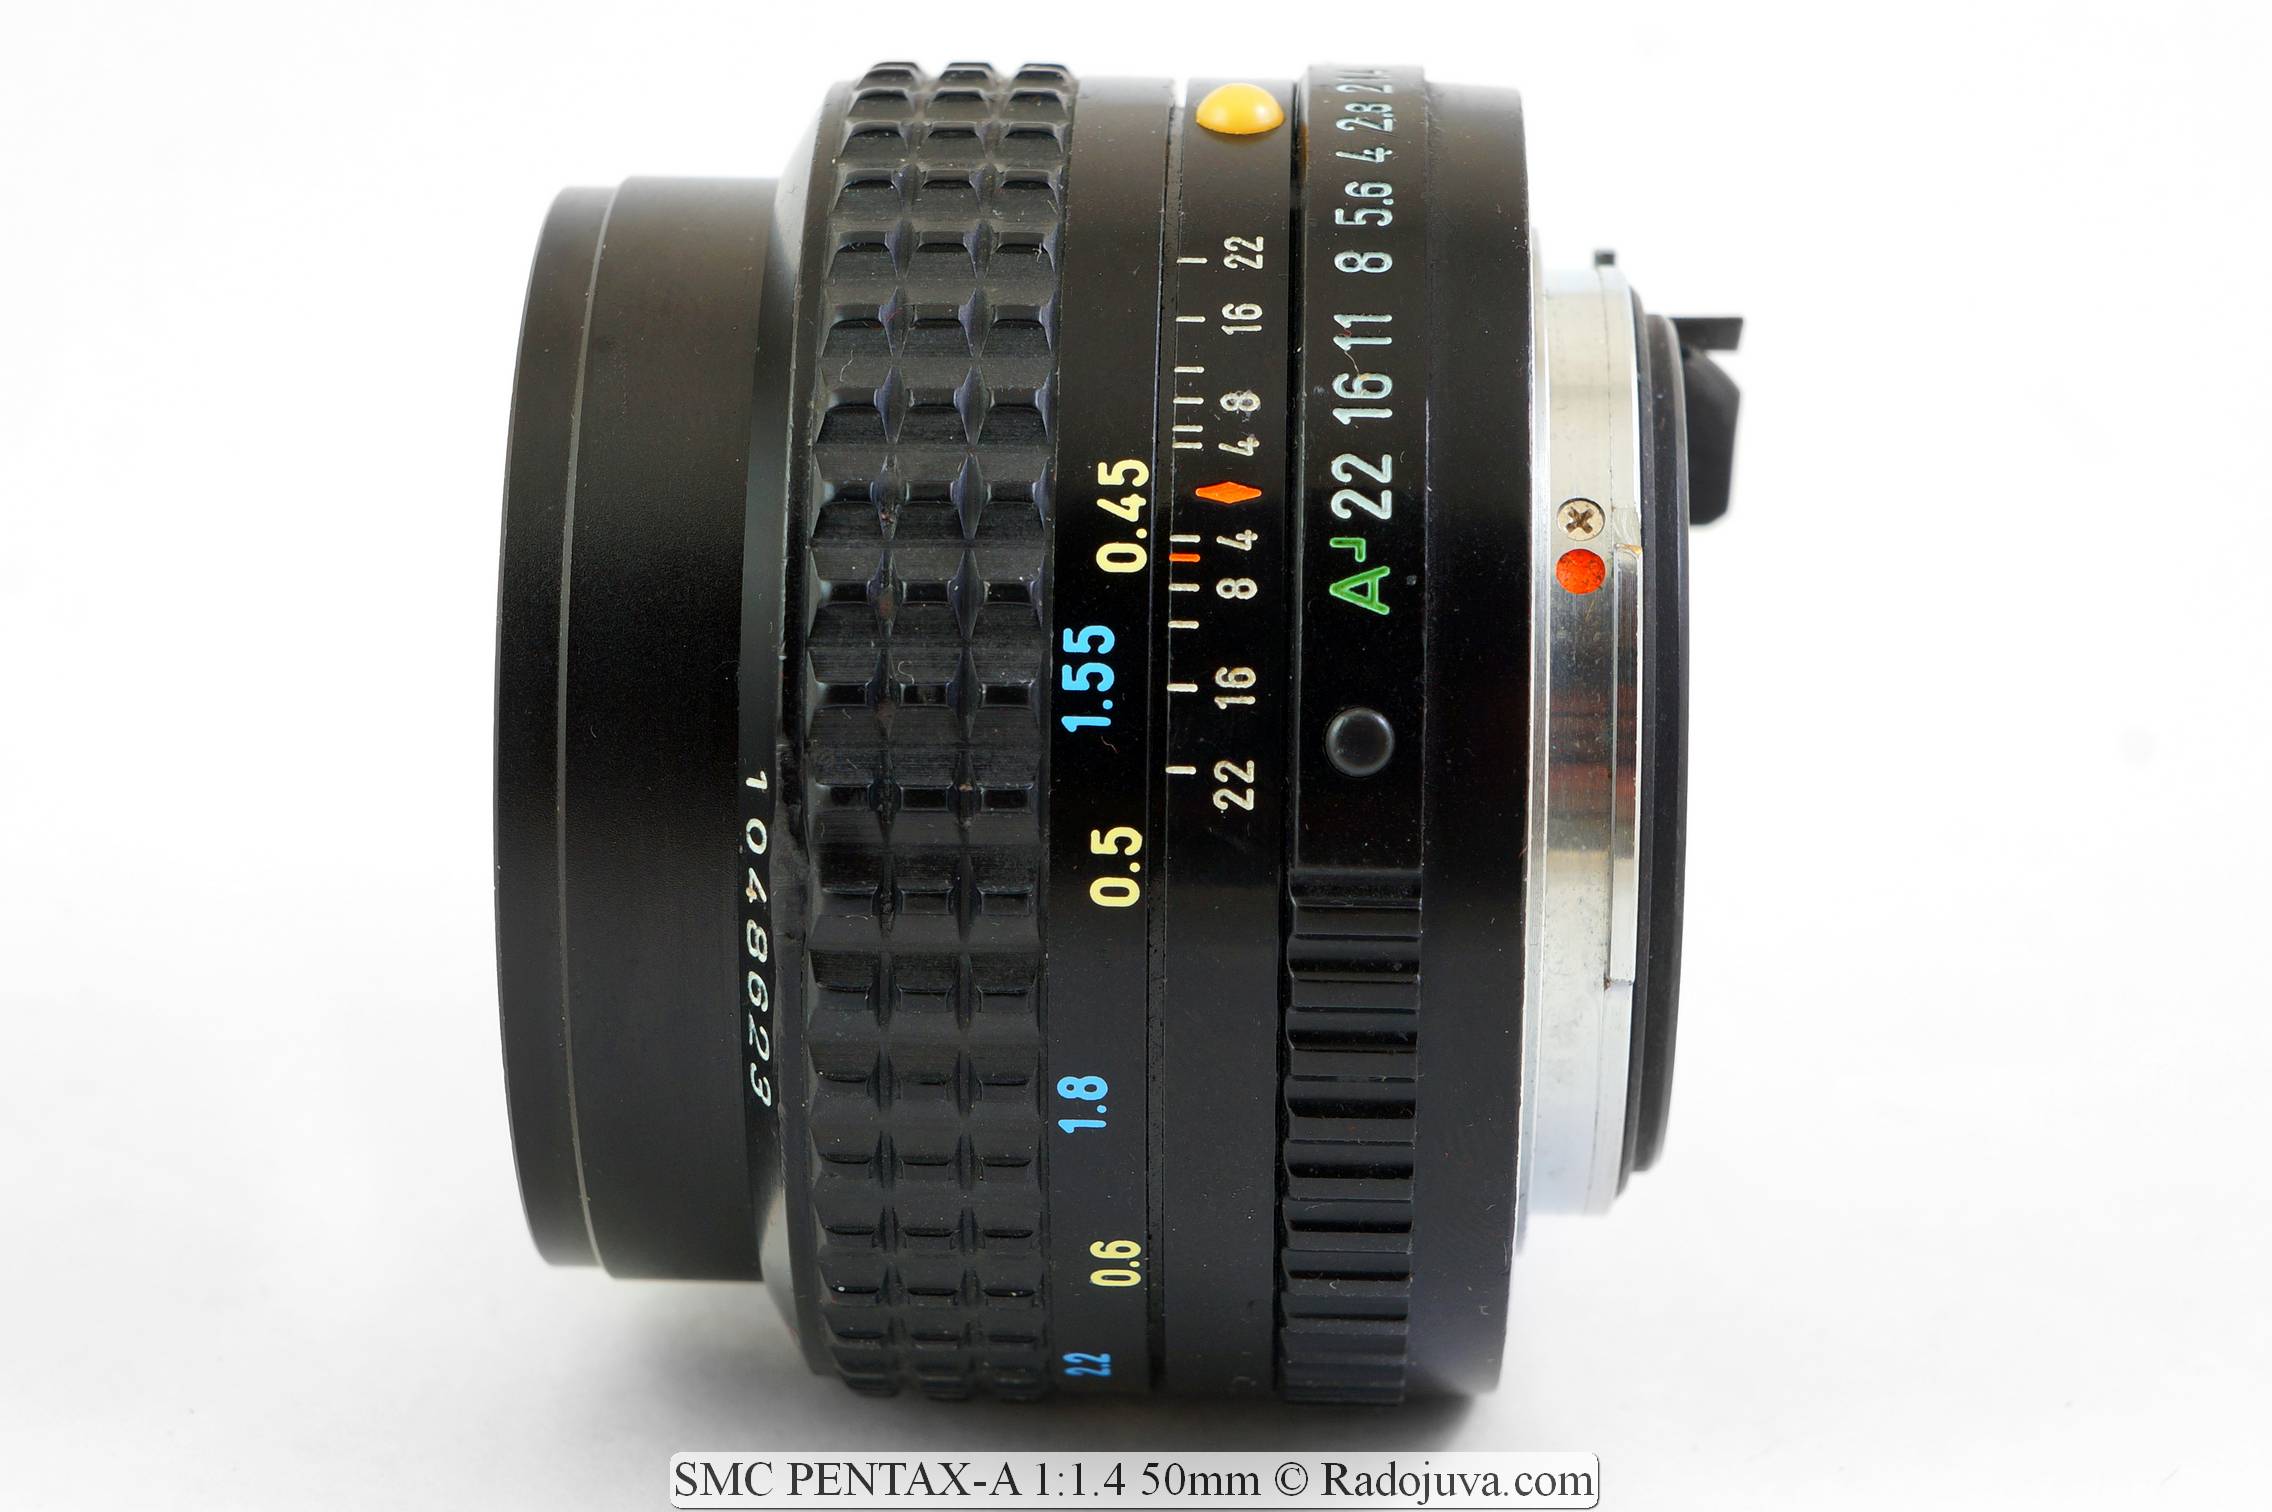 SMC PENTAX-A 1: 1.4 50mm